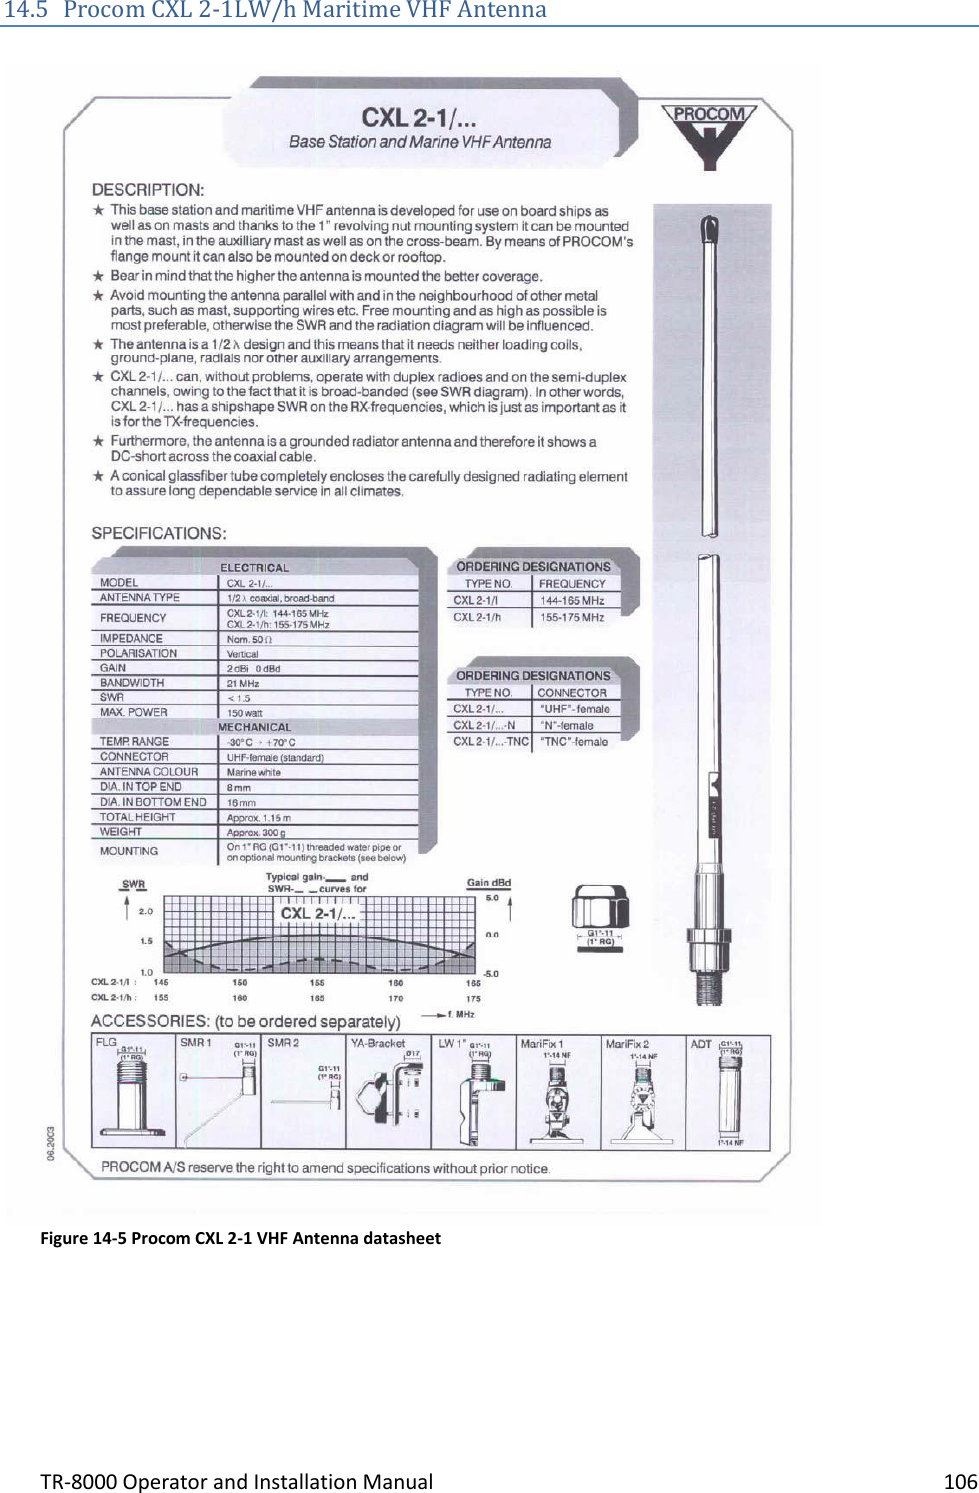 TR-8000 Operator and Installation Manual    106  14.5 Procom CXL 2-1LW/h Maritime VHF Antenna      Figure 14-5 Procom CXL 2-1 VHF Antenna datasheet    